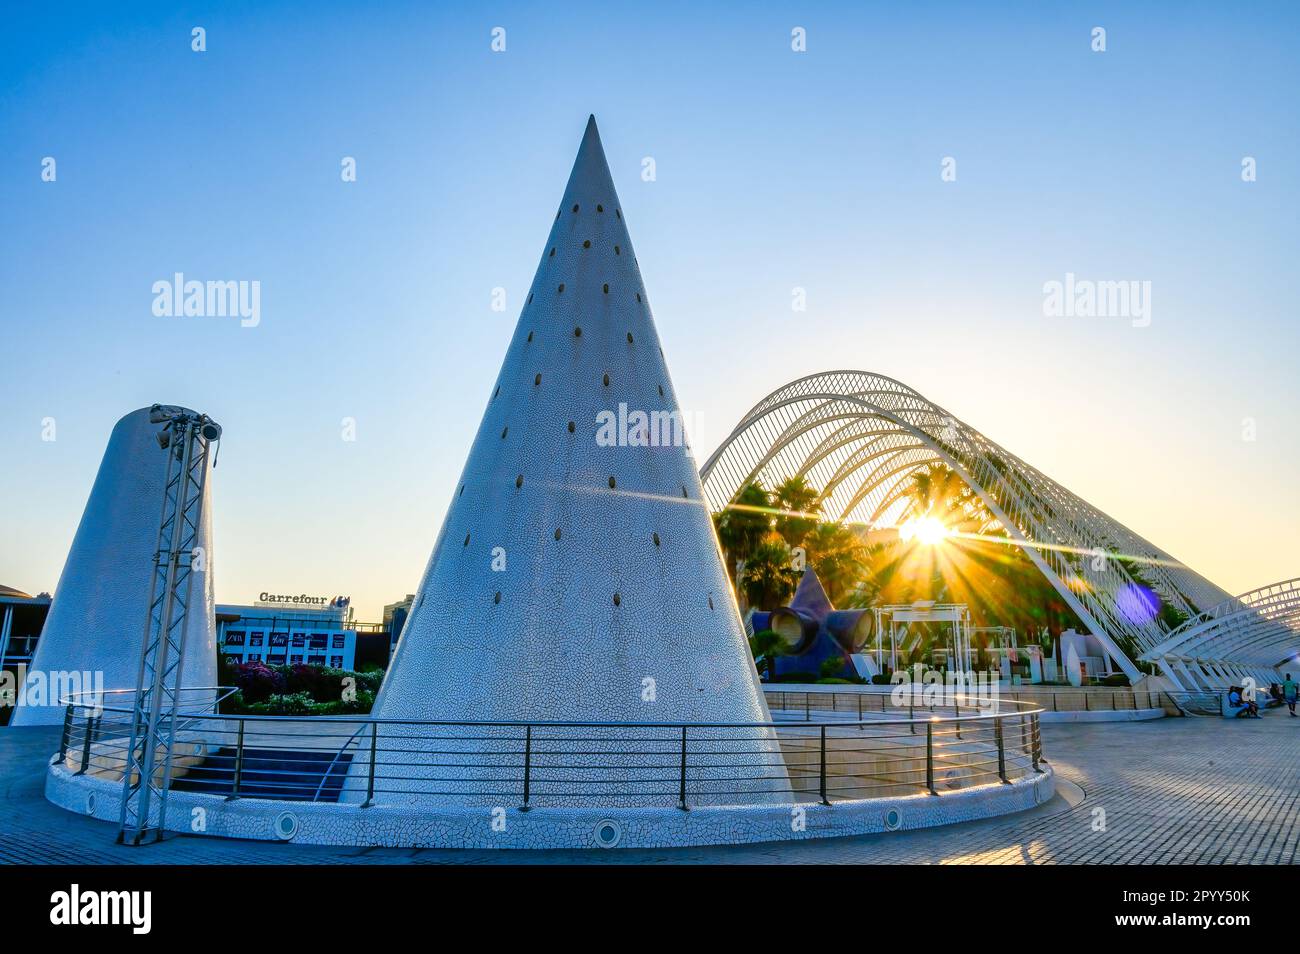 Valencia, Spagna - 17 luglio 2022: Tramonto con raggi di sole attraverso l'edificio l'Umbracle. La "Ciudad de las Artes y las Ciencias" è una struttura internazionale Foto Stock